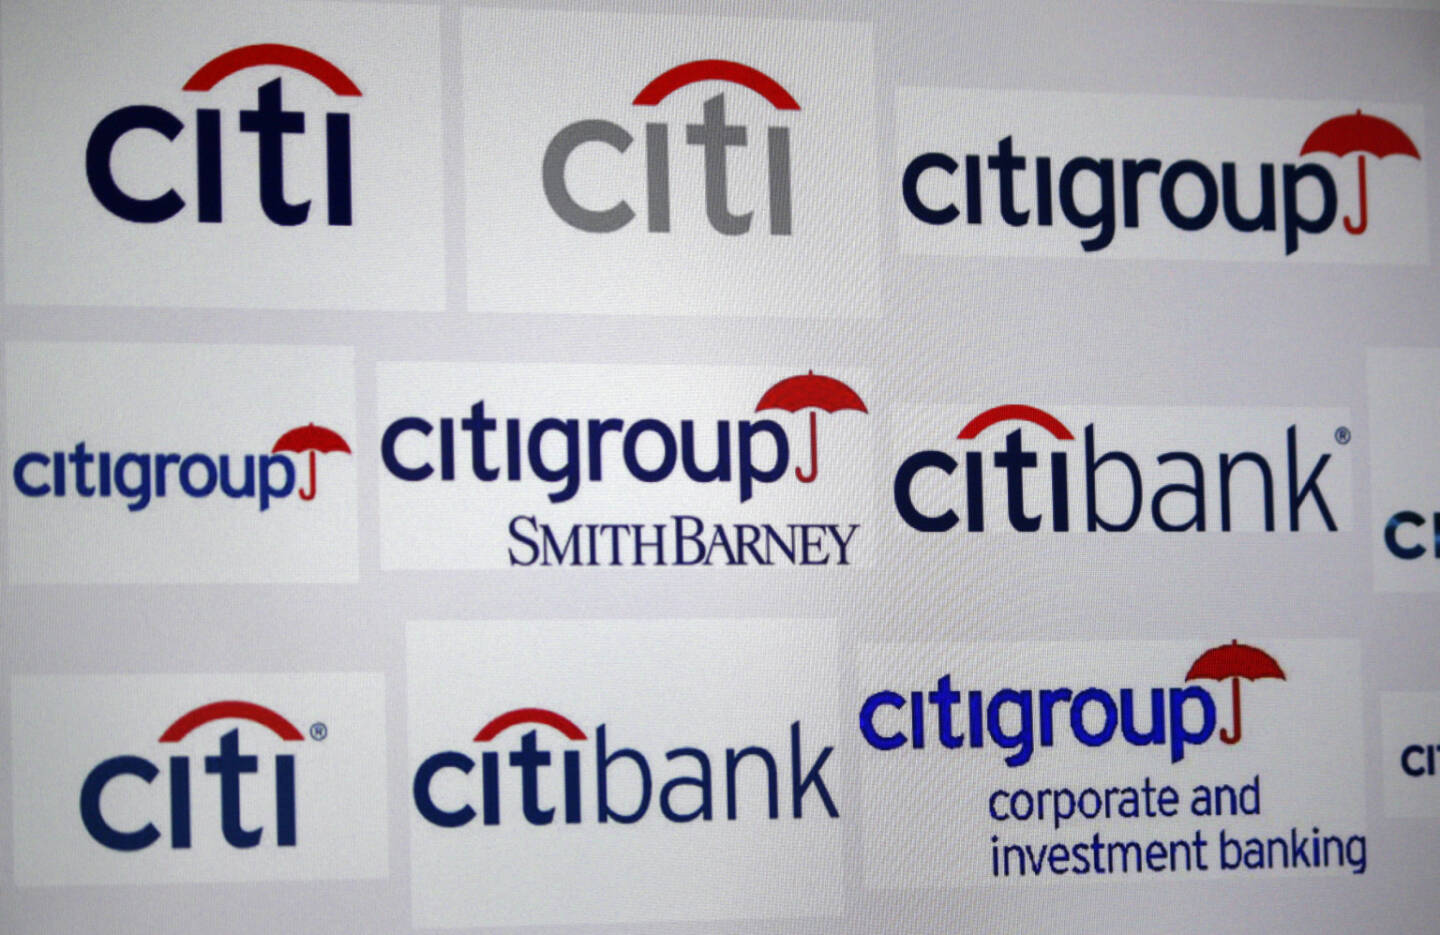 Citi, Citigroup <a href=http://www.shutterstock.com/gallery-320989p1.html?cr=00&pl=edit-00>360b</a> / <a href=http://www.shutterstock.com/editorial?cr=00&pl=edit-00>Shutterstock.com</a>